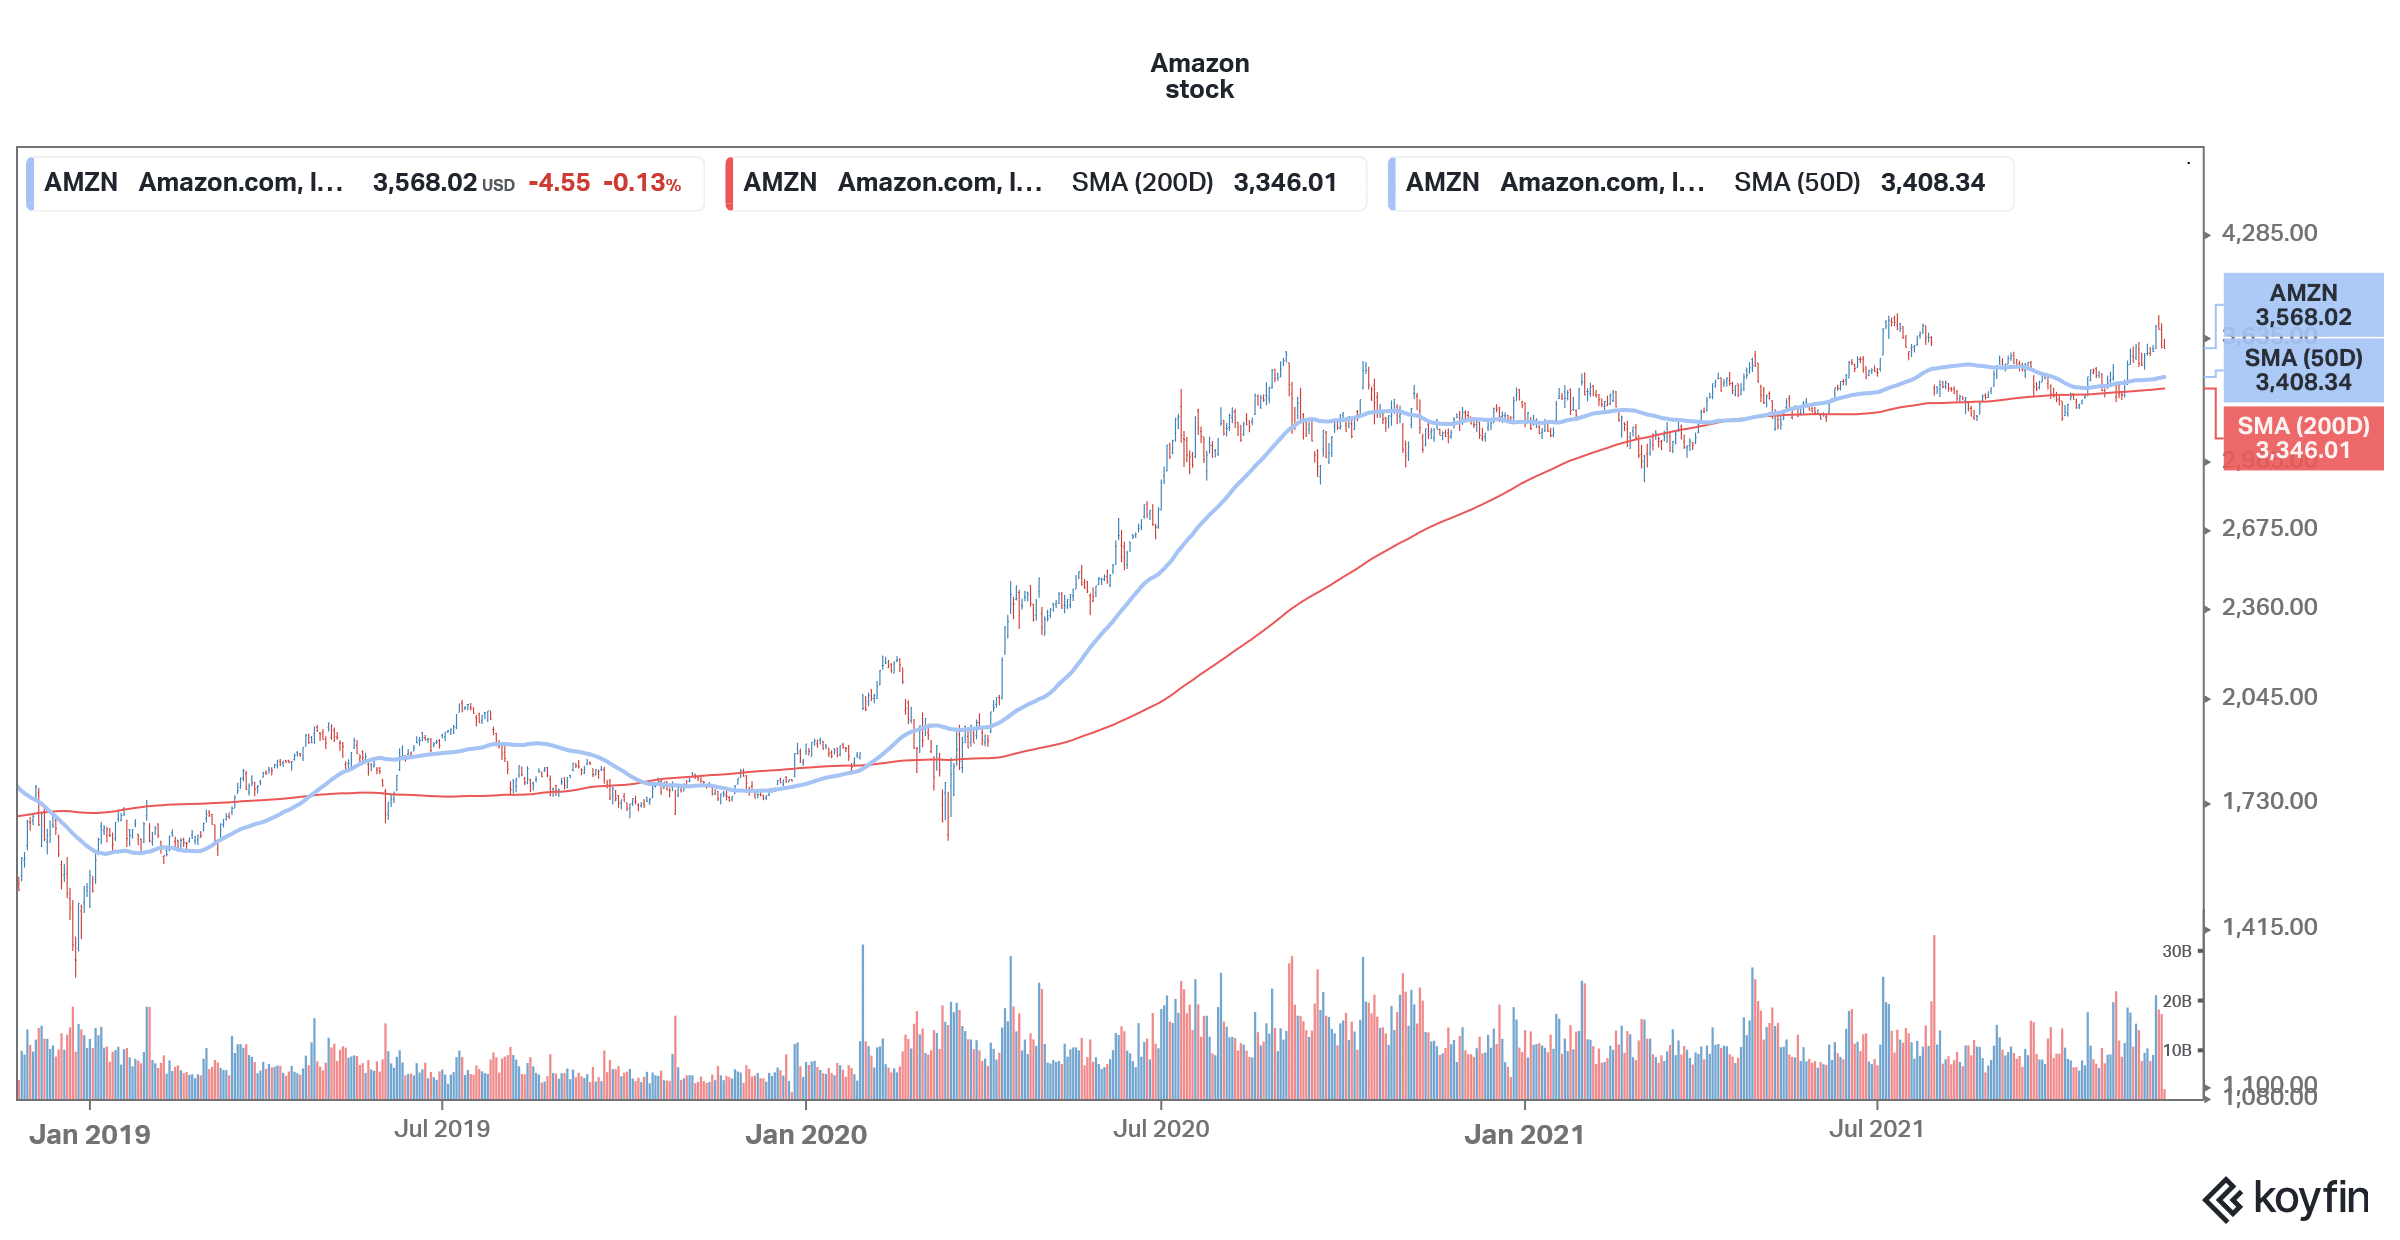 amazon is a good long-term stock